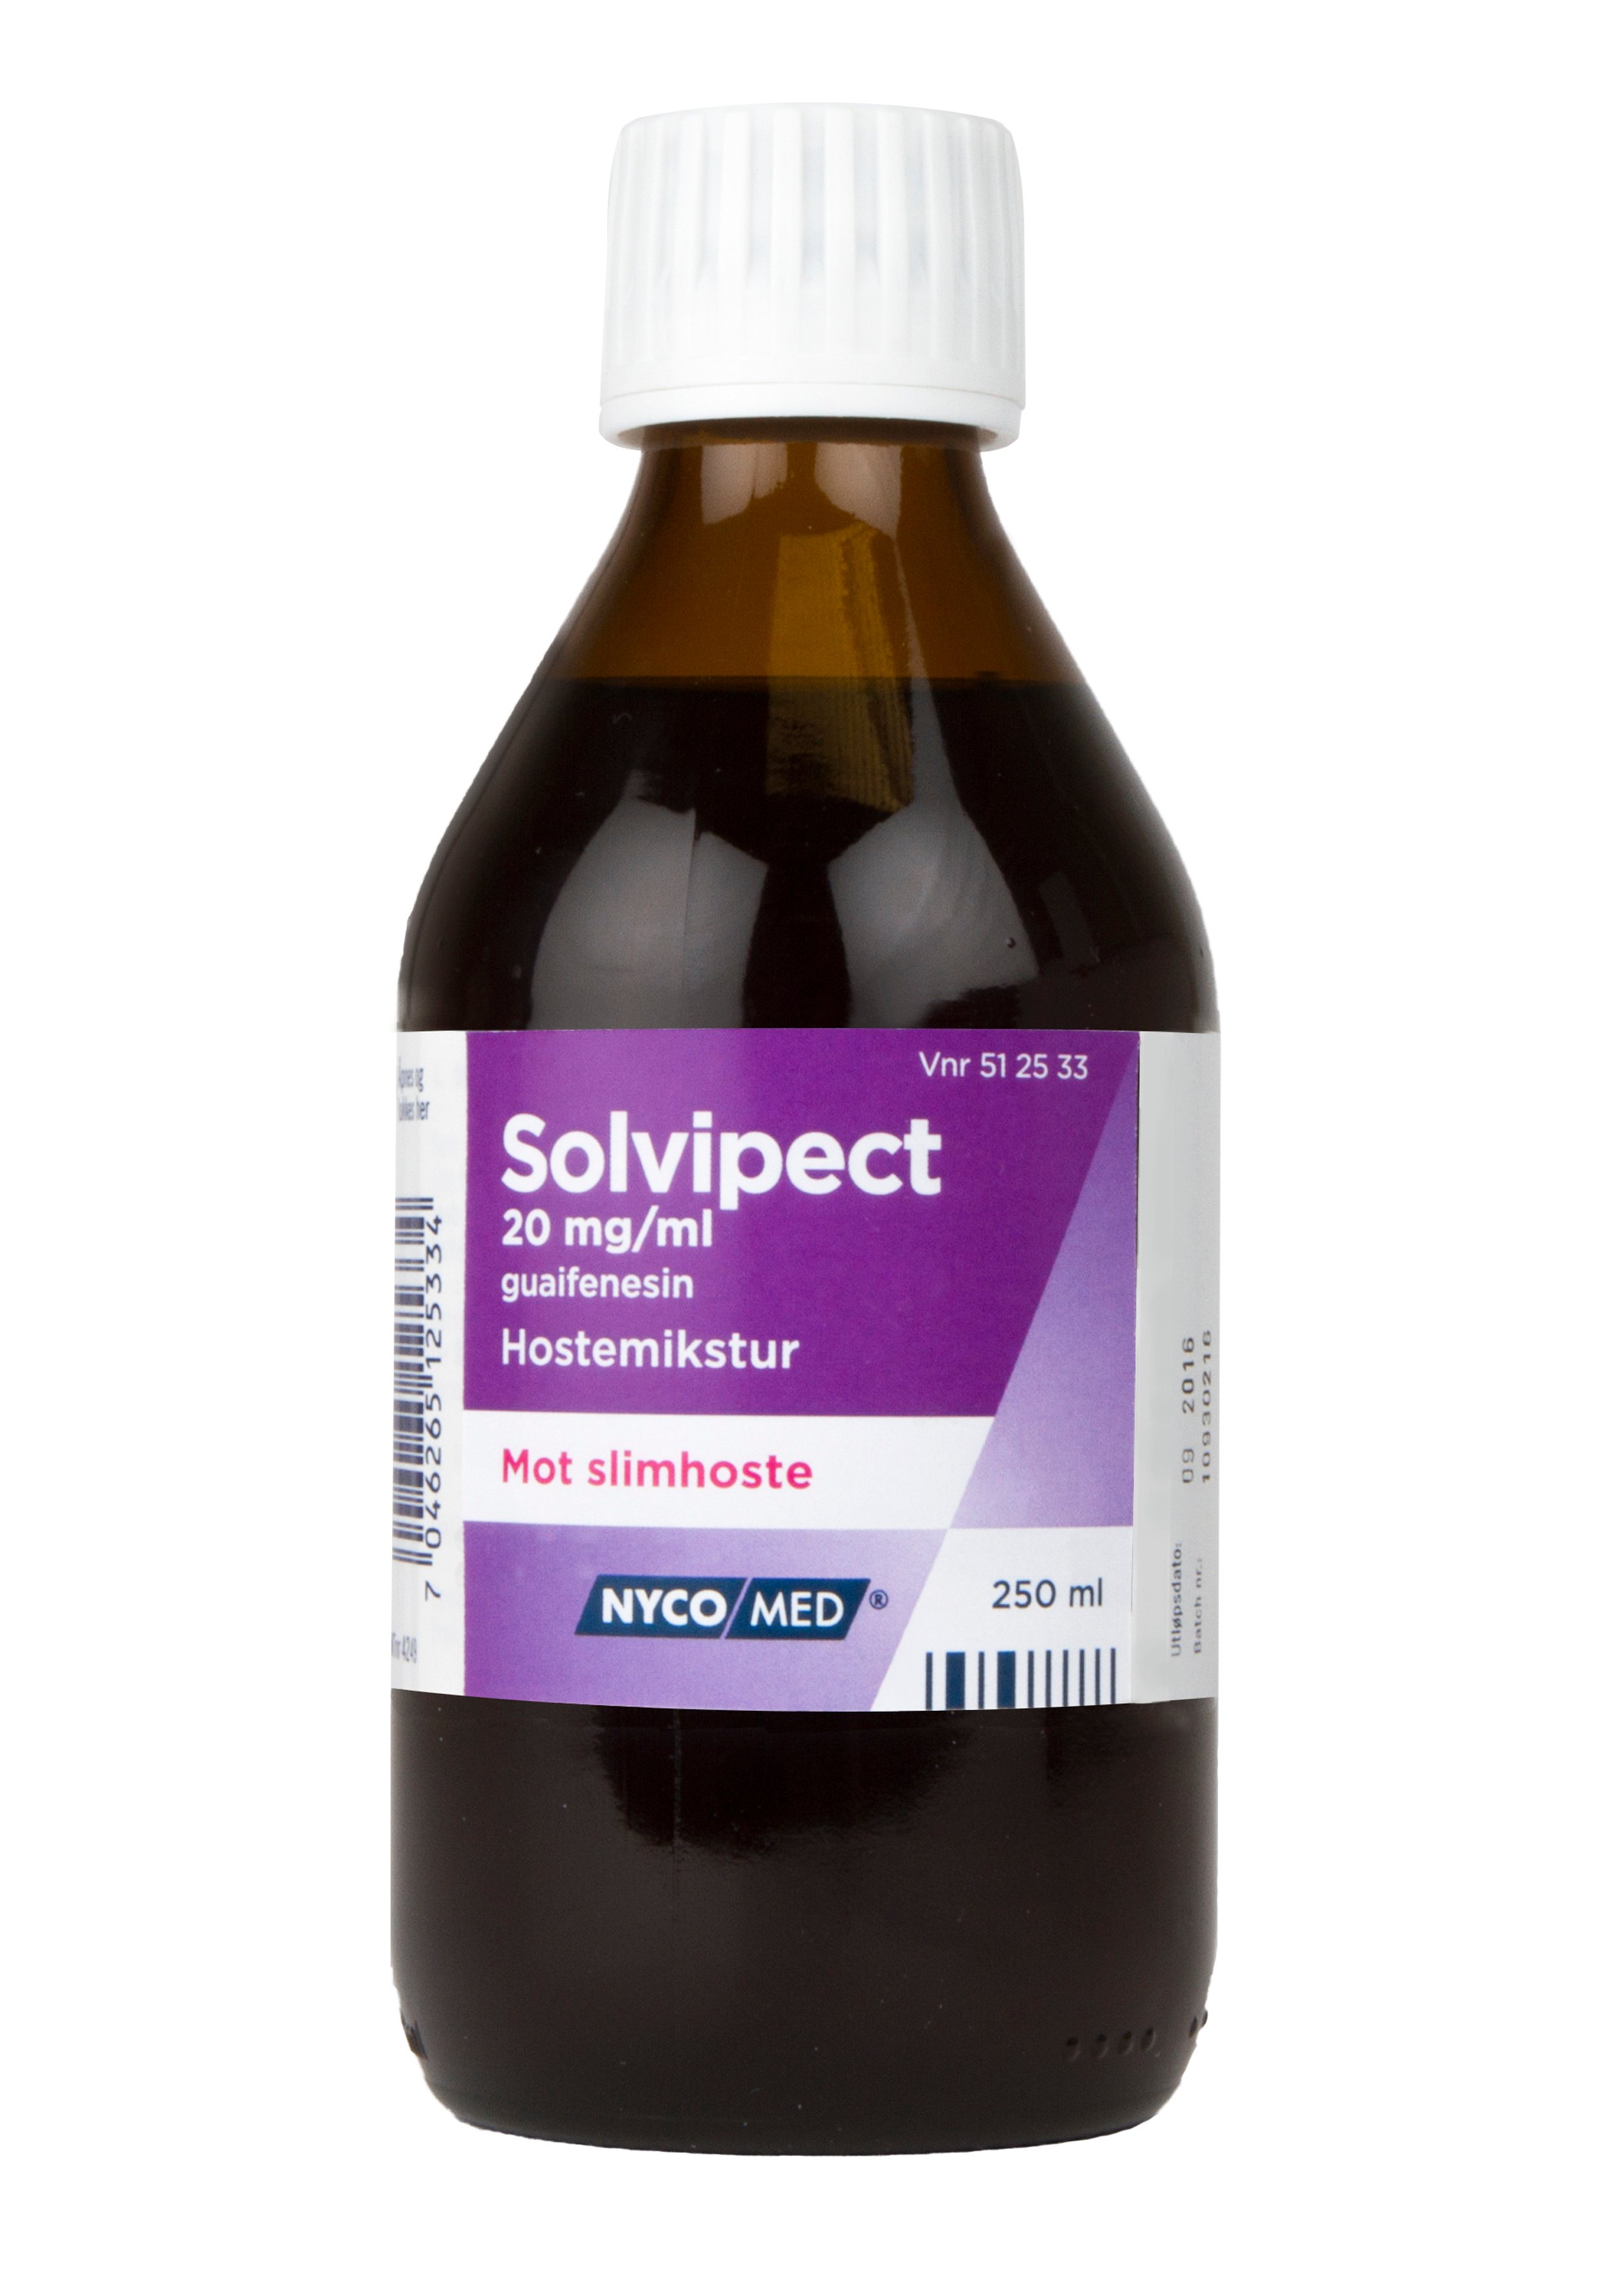 Solvipect Mikstur, 250 ml.